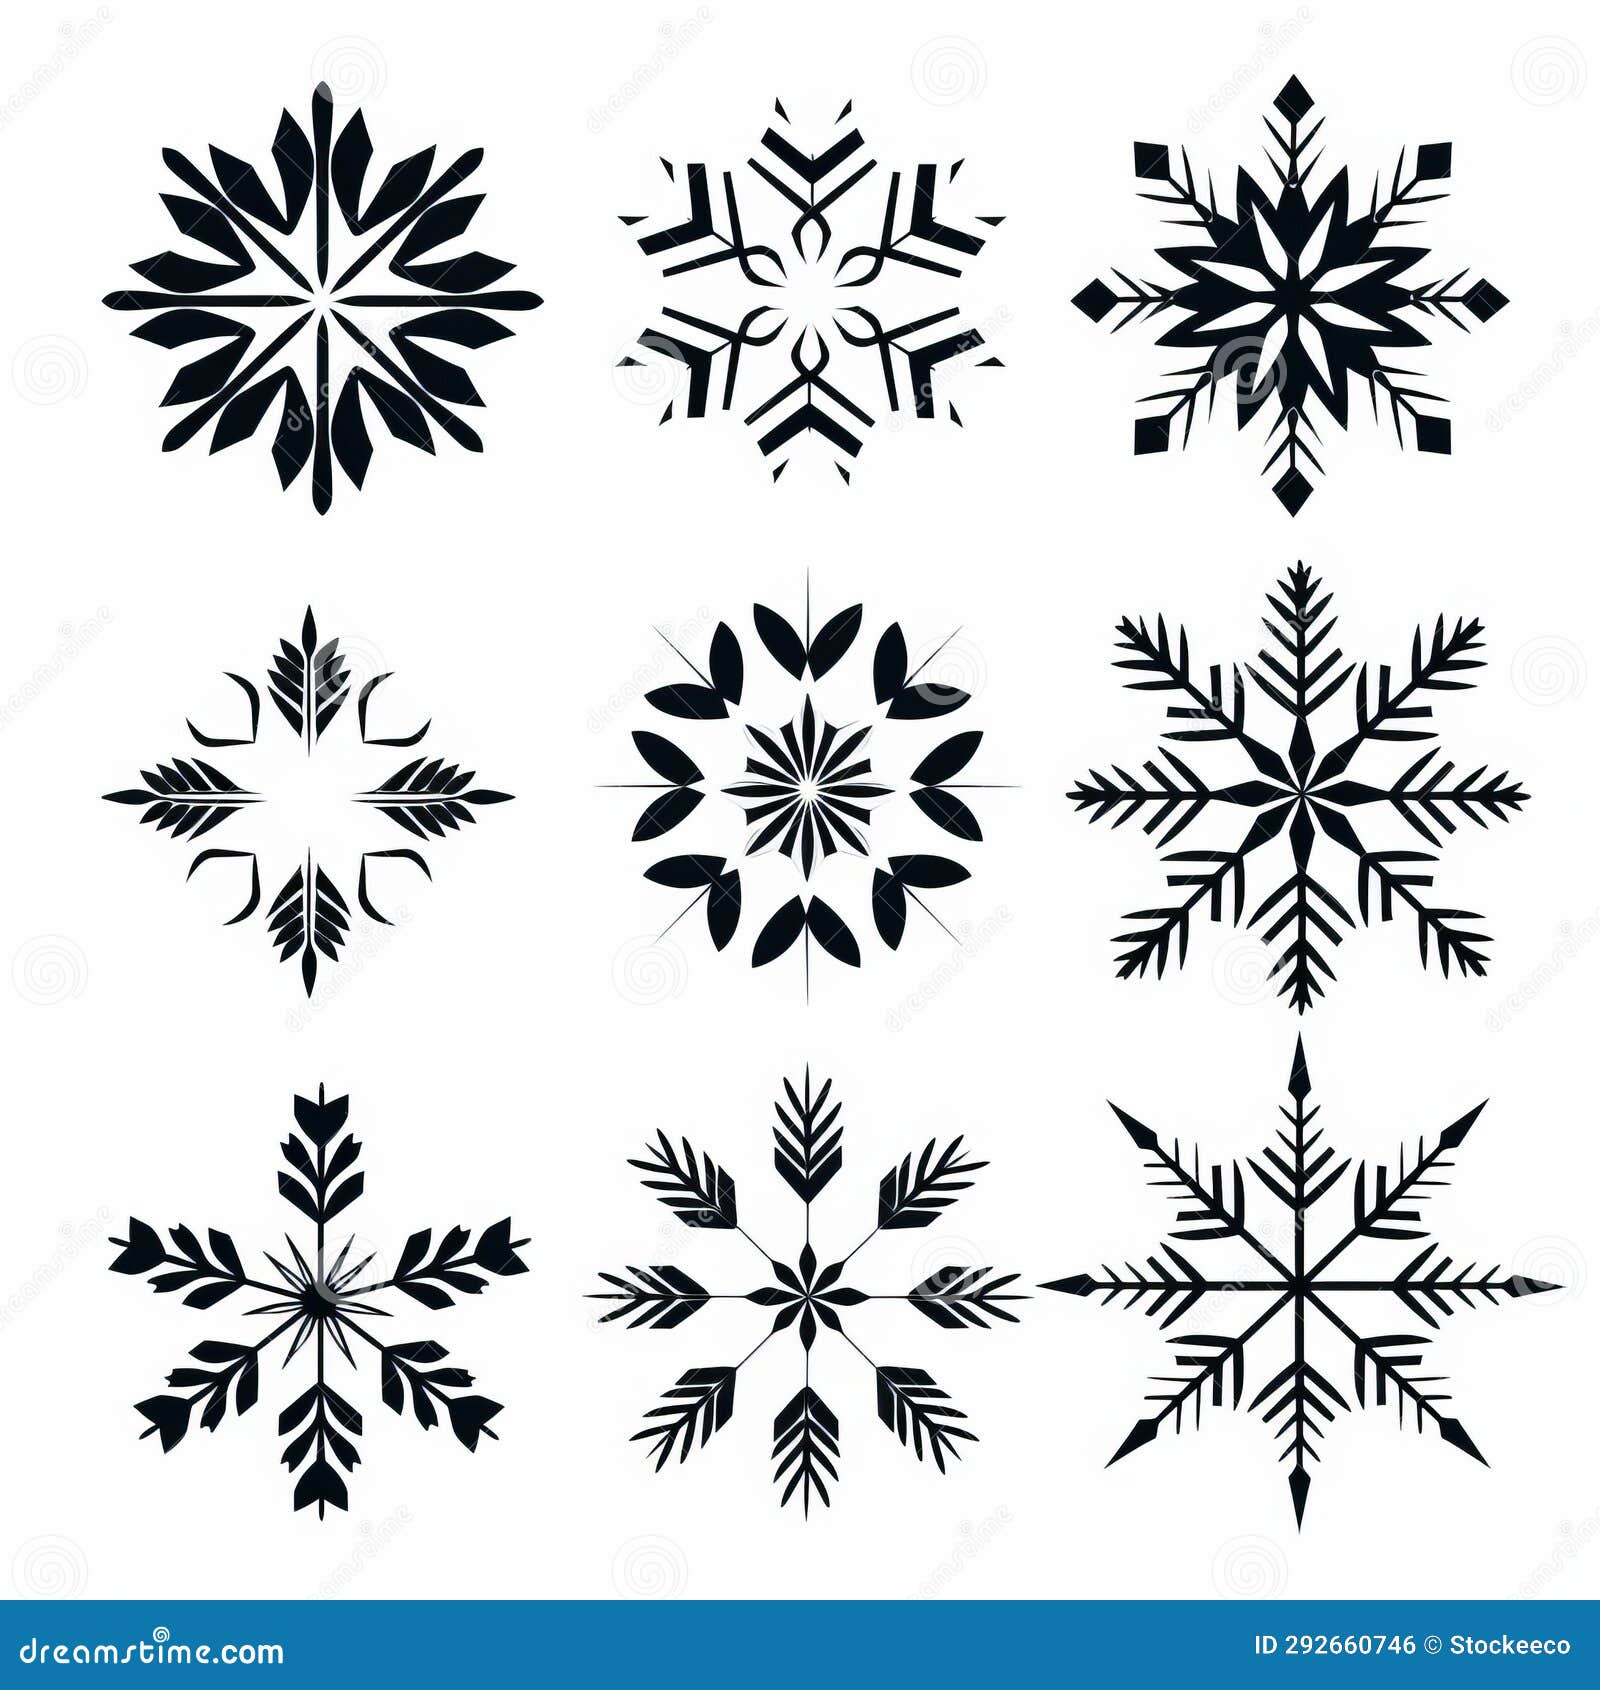 bold and symmetrical snowflake  art for christmas